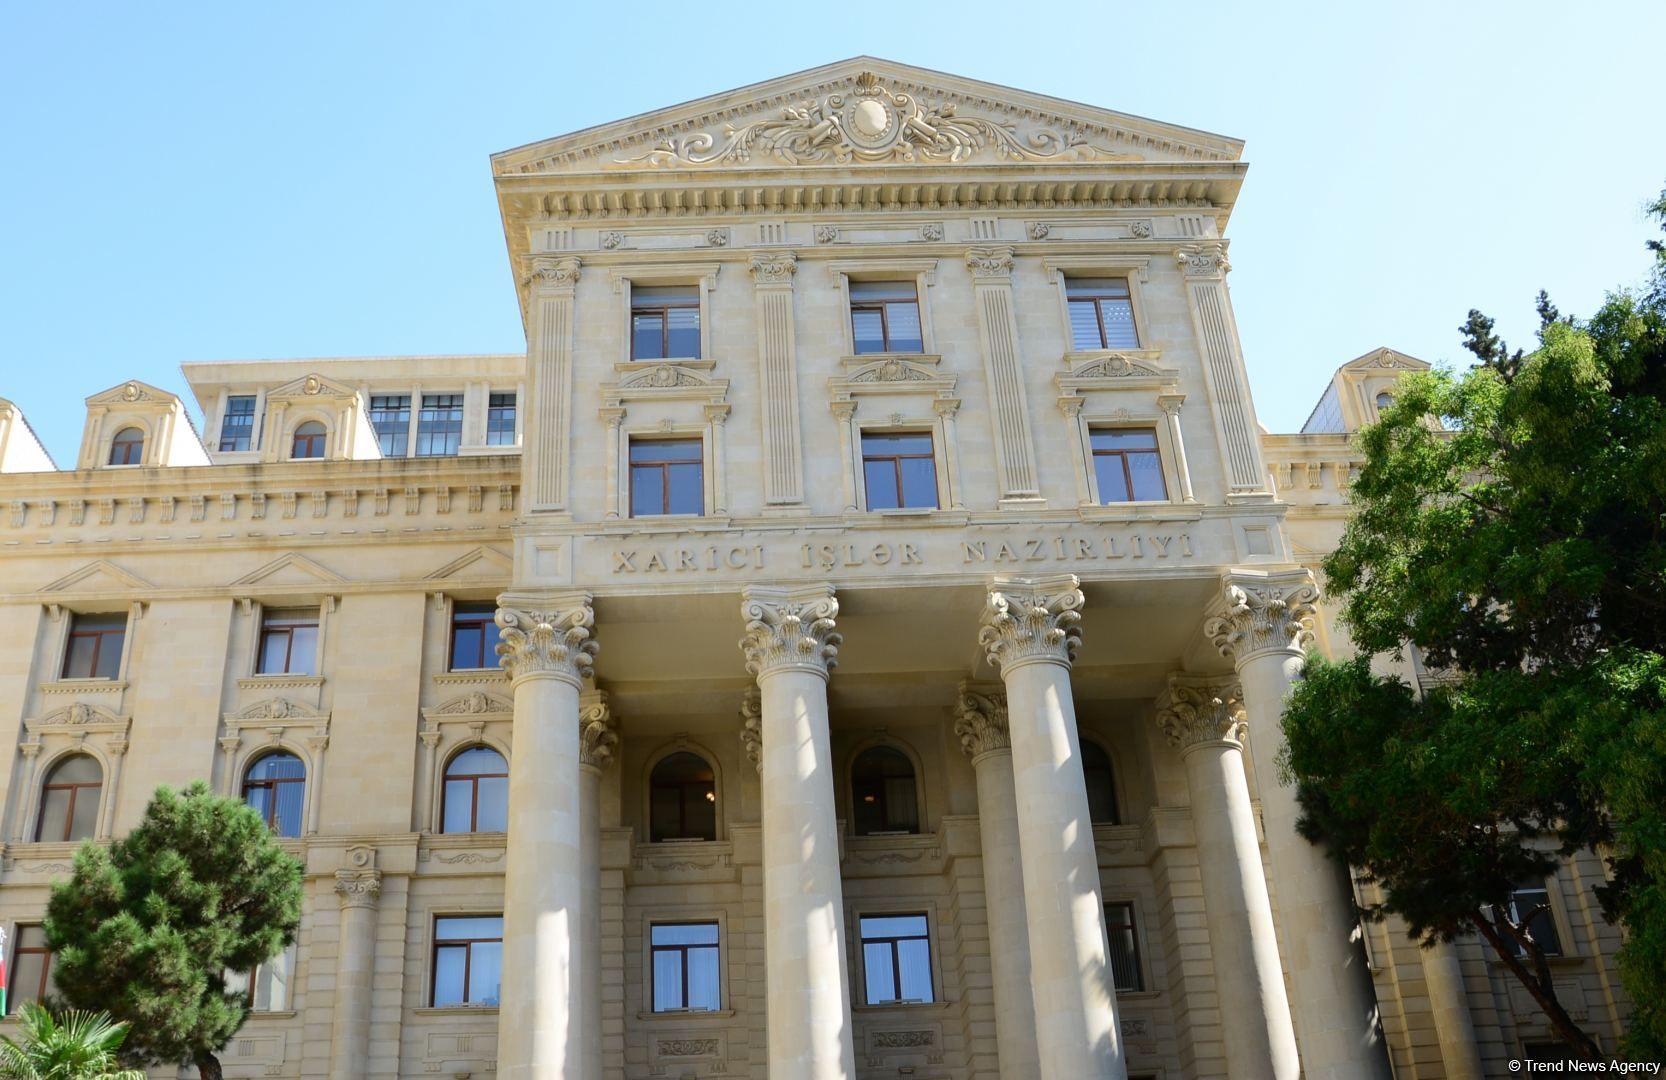 Promoting Azerbaijan's interests within new regional realities – top priority, MFA says